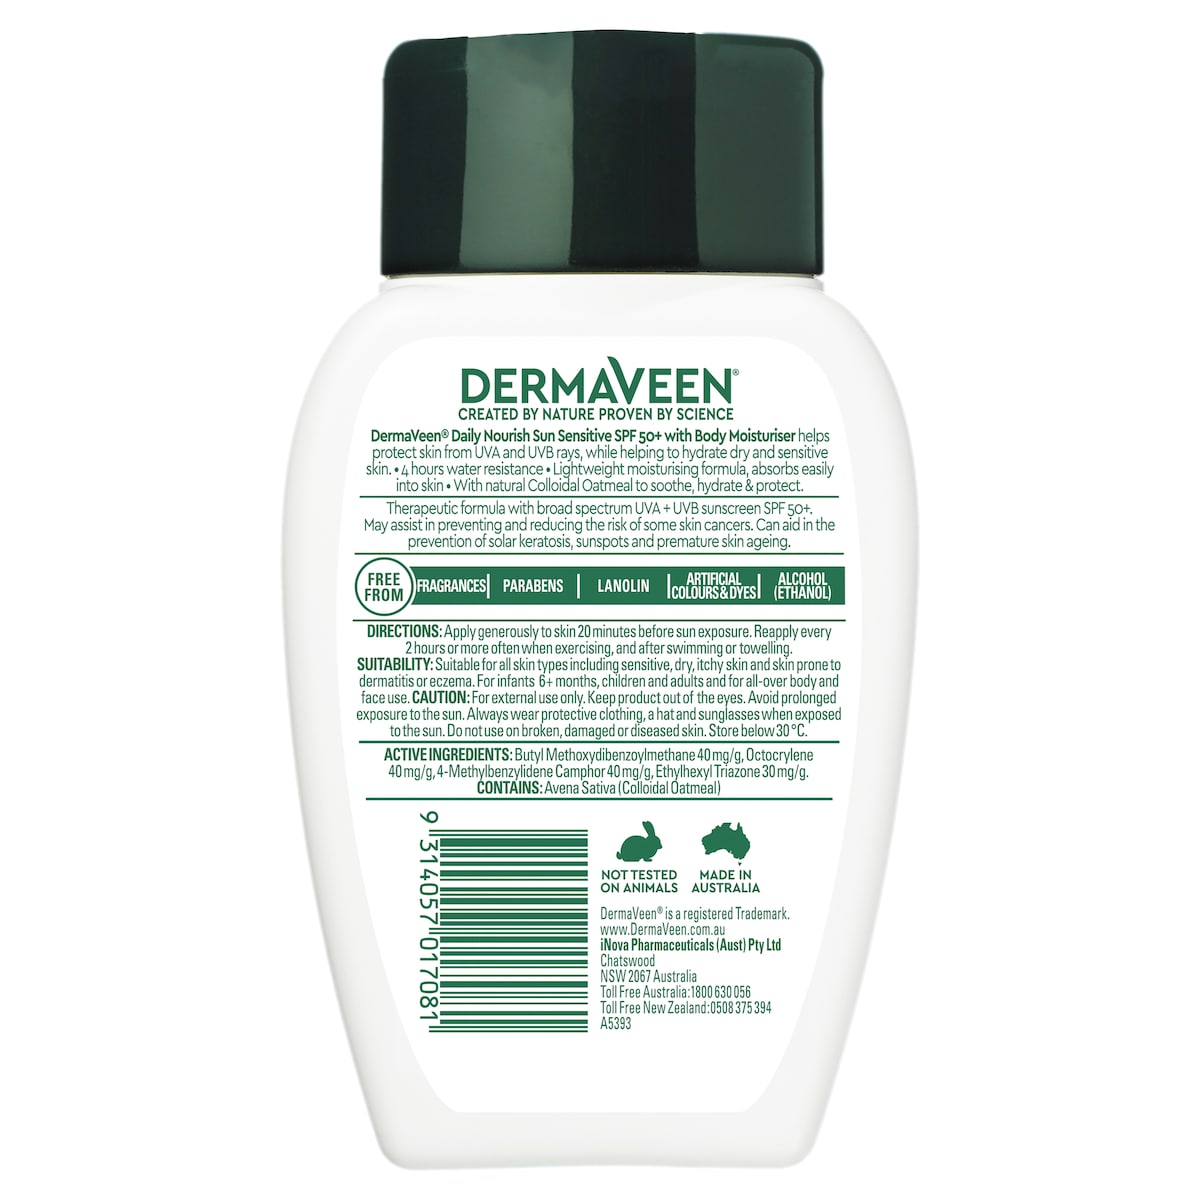 DermaVeen Daily Nourish Sun Sensitive Body Moisturiser SPF50+ 250g